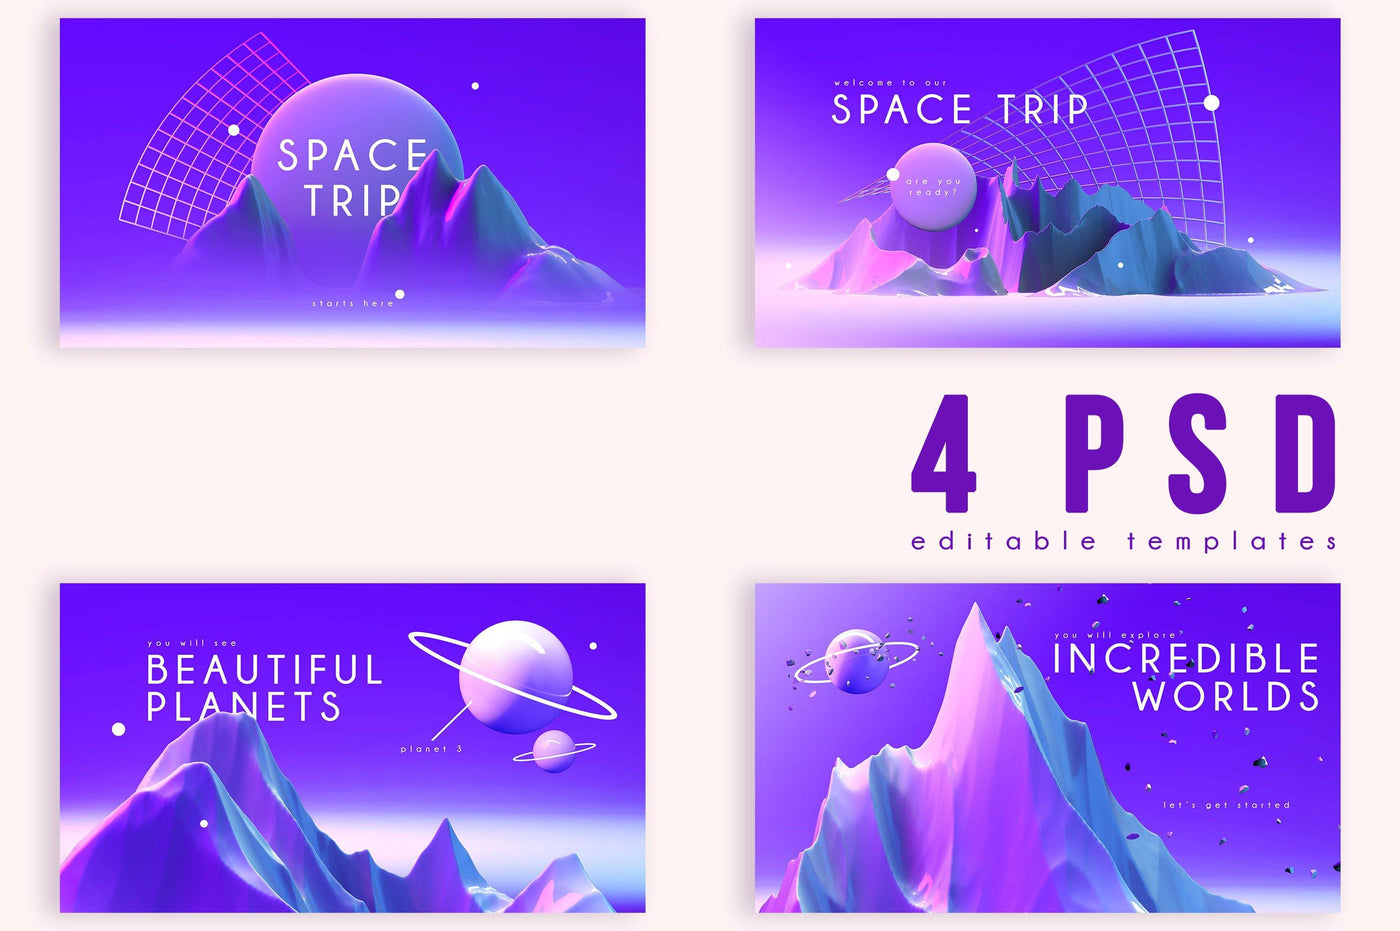 Purple Space - 160+ Eye-Catching Elements - Artixty